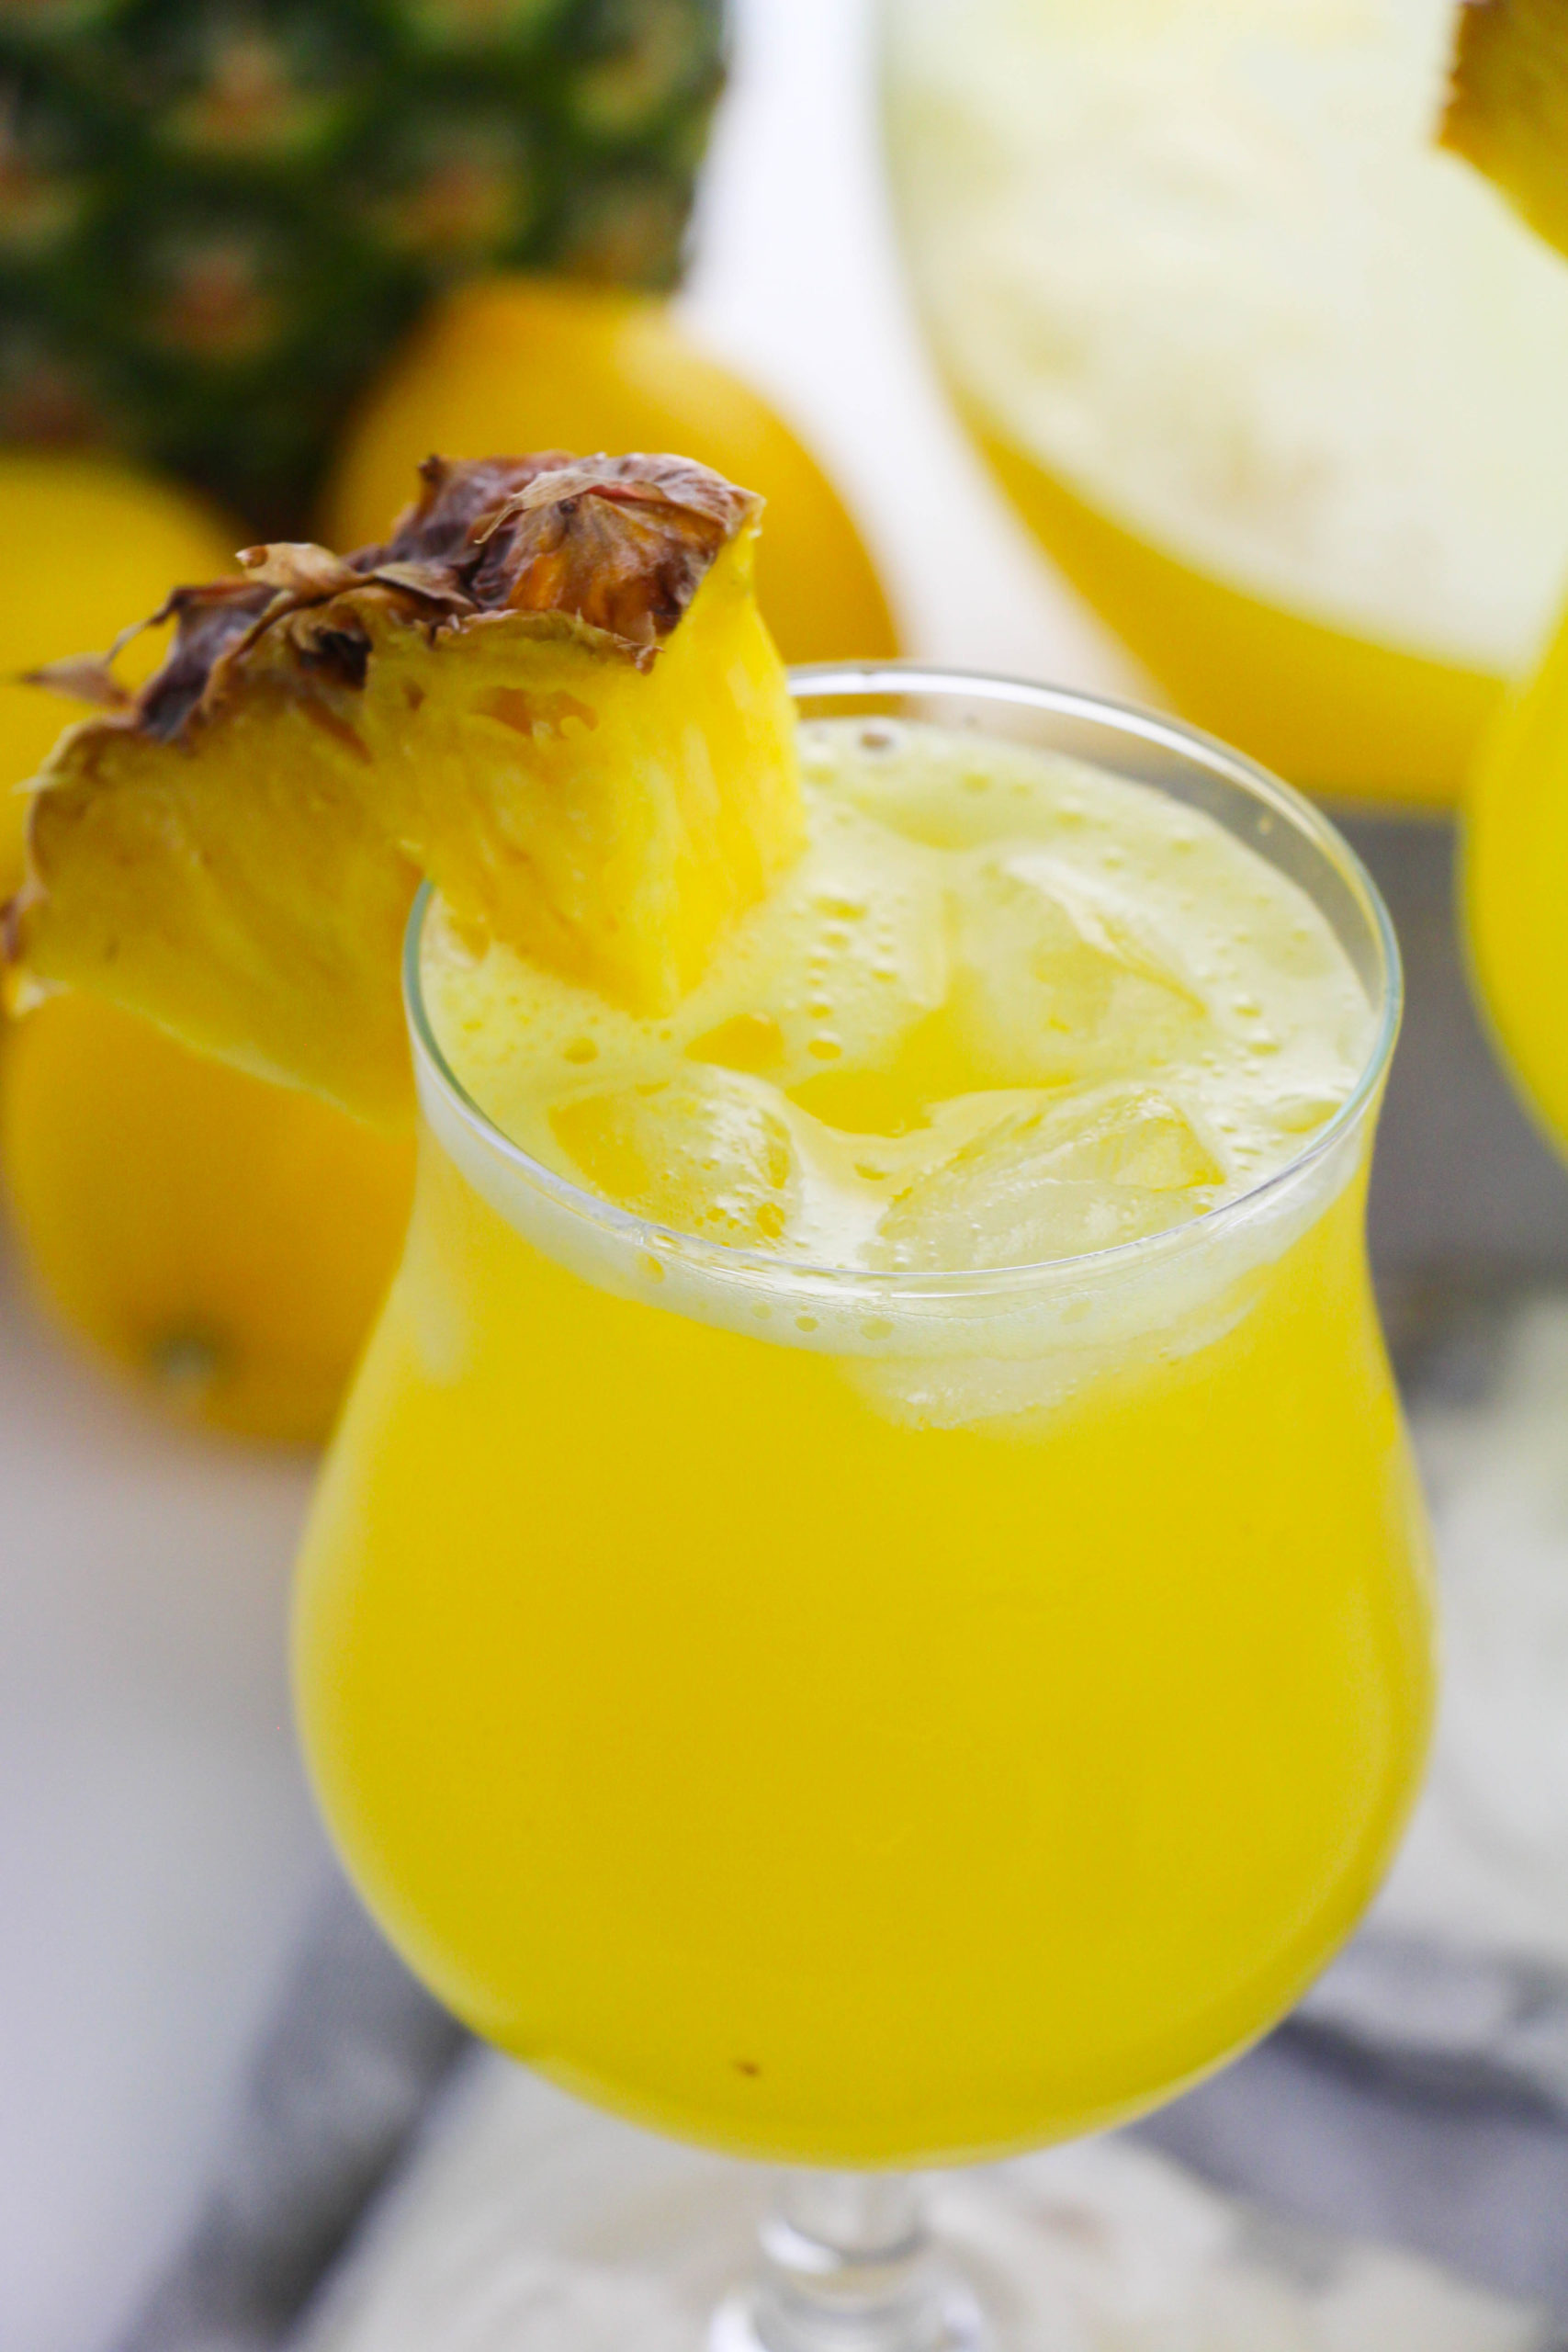 Pineapple lemonade in a clear glass.